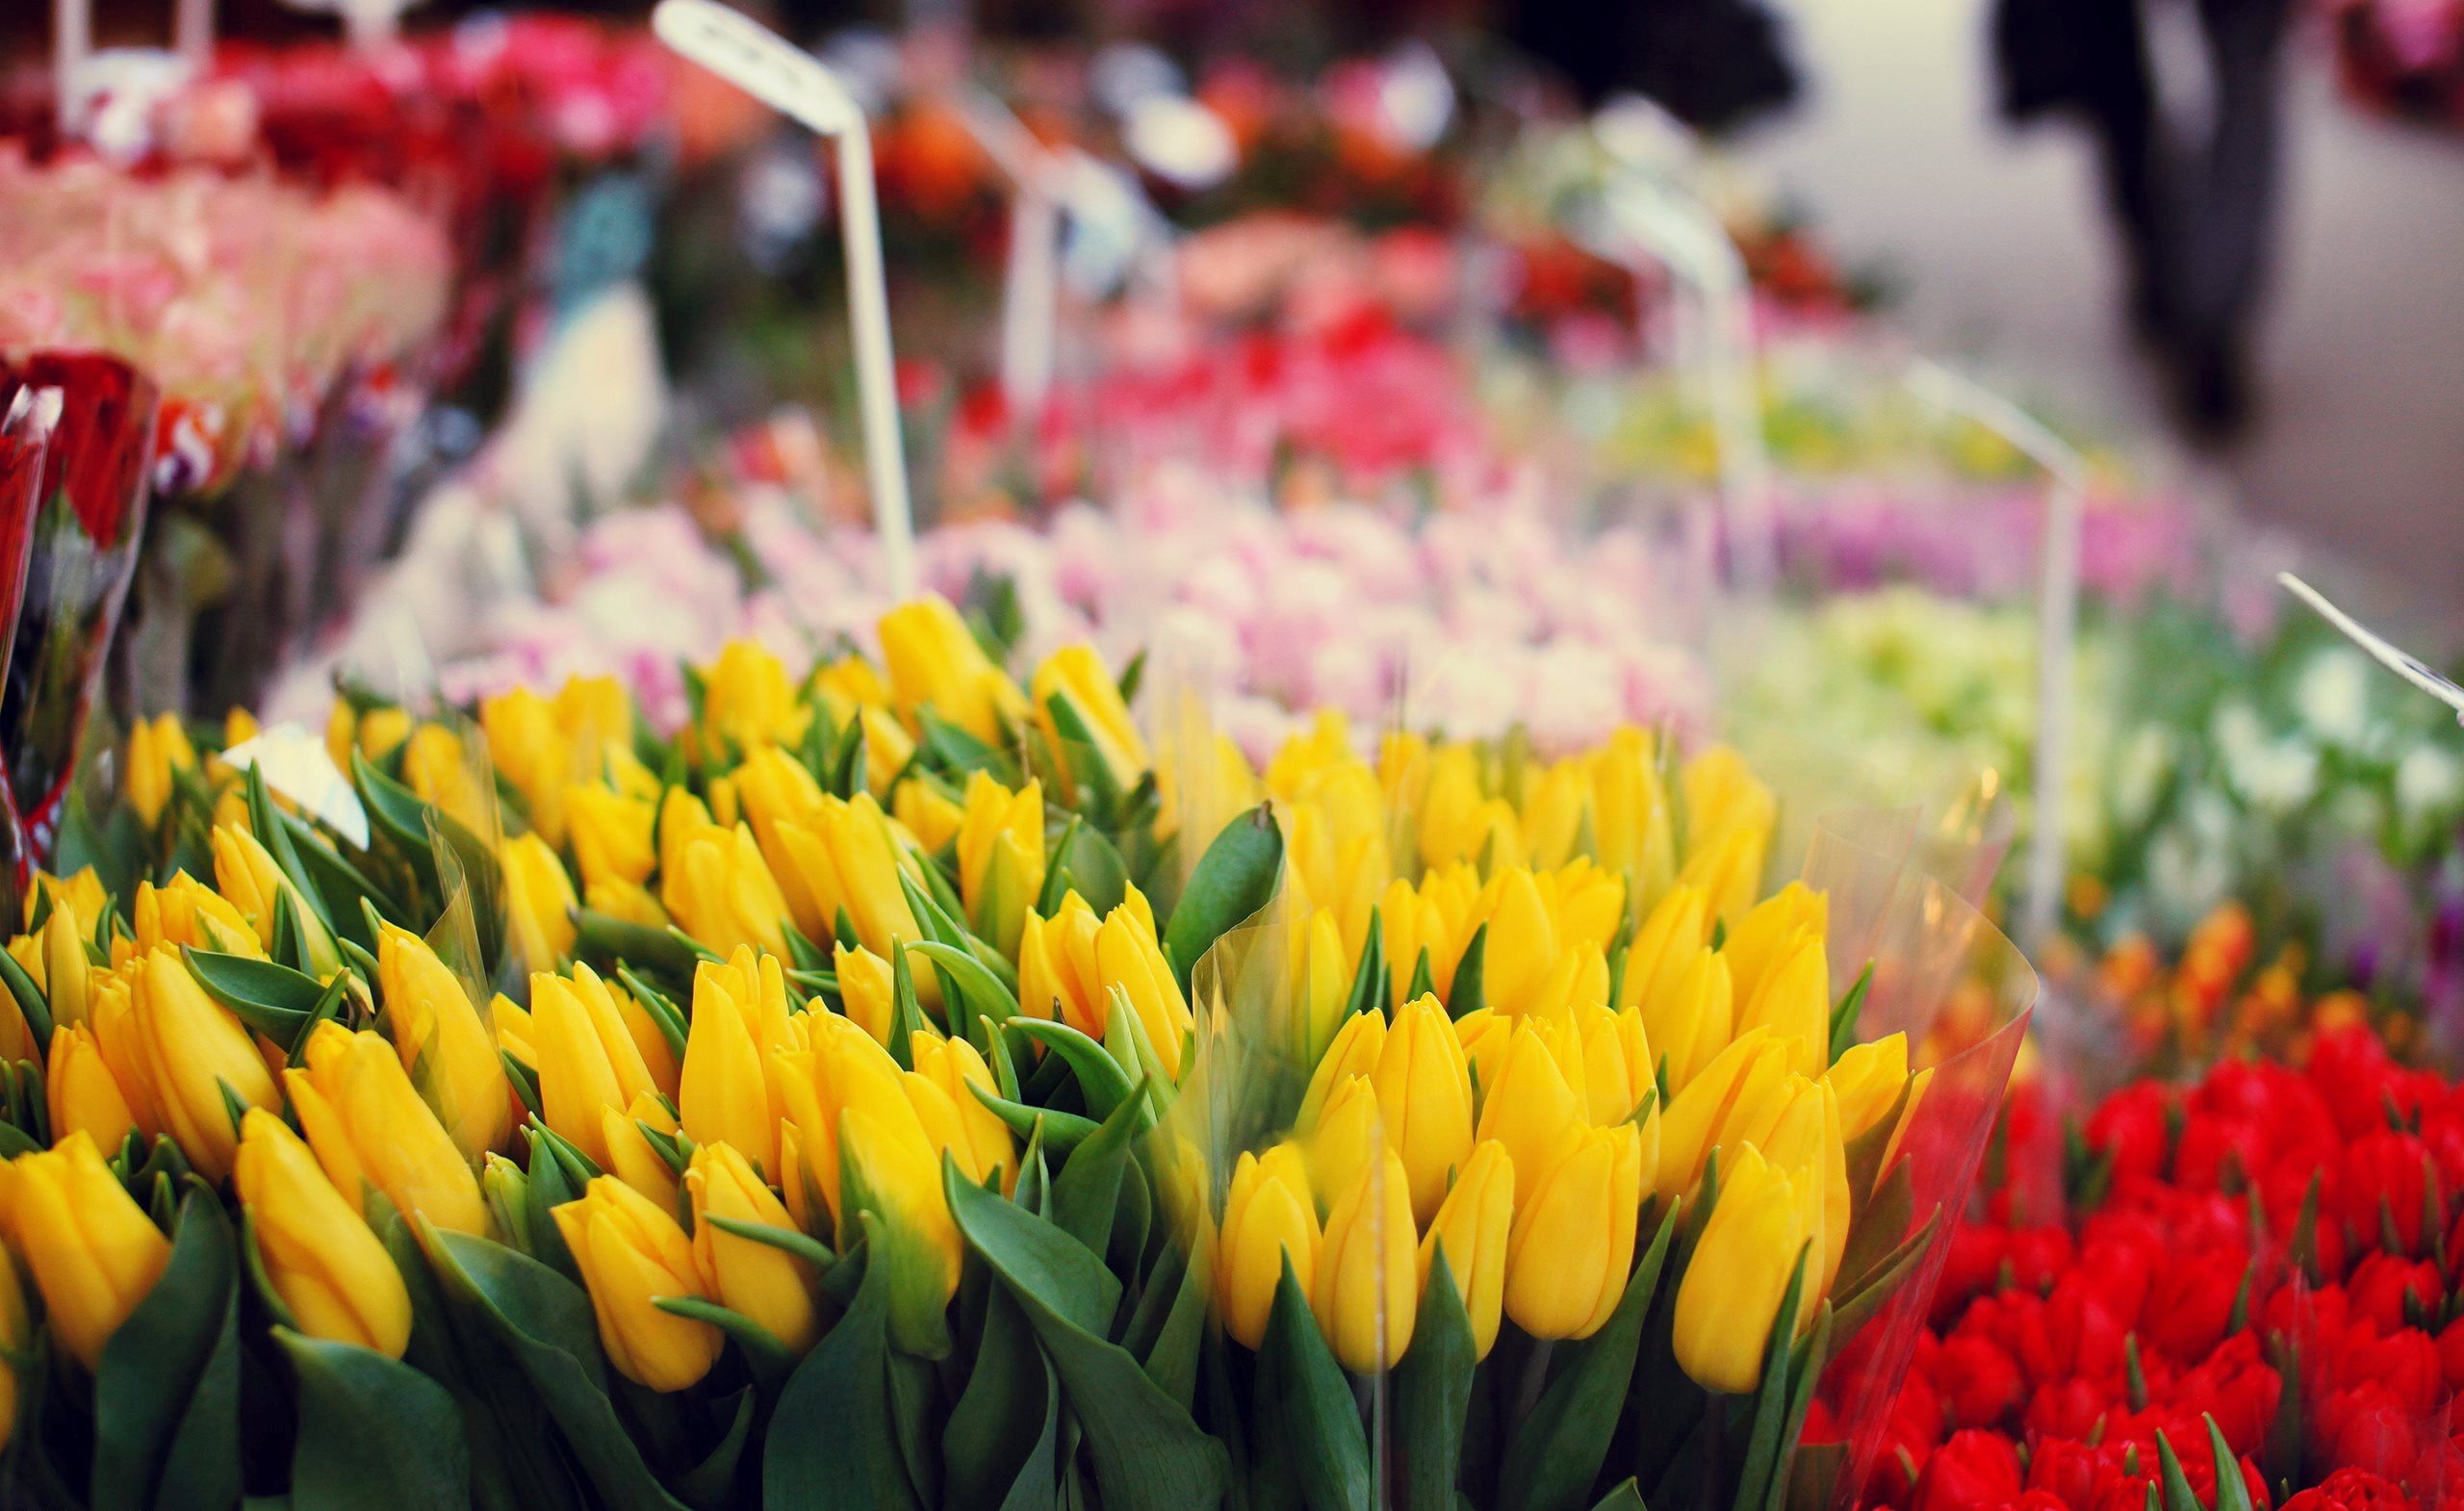 Новый цветочный рынок. Цветы тюльпаны. Расцветки тюльпанов. Охапка тюльпанов. Тюльпаны на рынке.